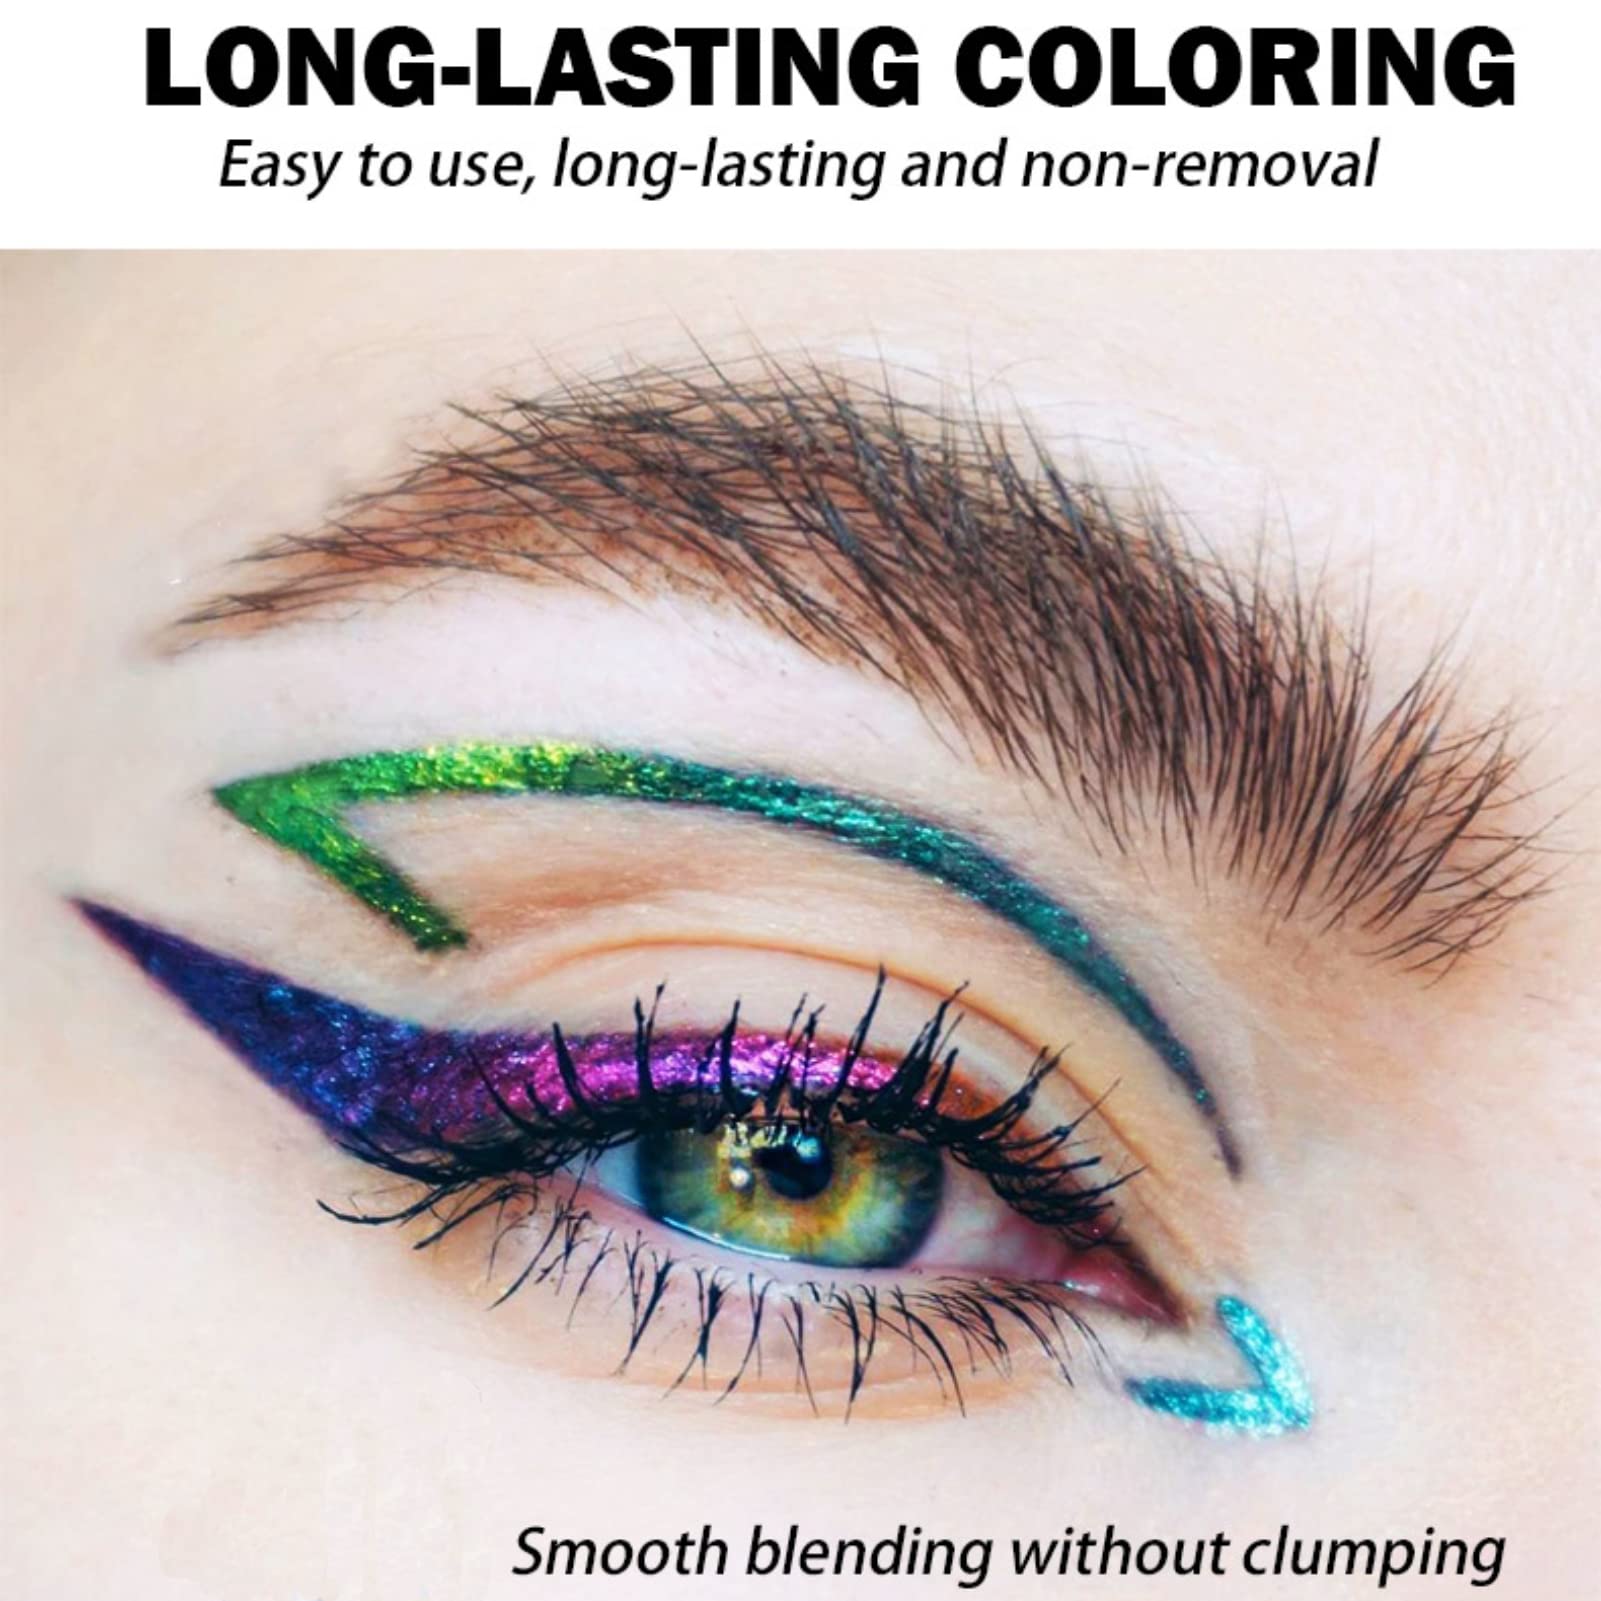 Corleone Glitter Liquid Eyeliner, Metallic Change Color Rainbow Eyeliner Gel MultiColor Highly Pigmented Waterproof Longer-Lasting Colorful Eye Liner Gift Kit for Women and Girls (A3)